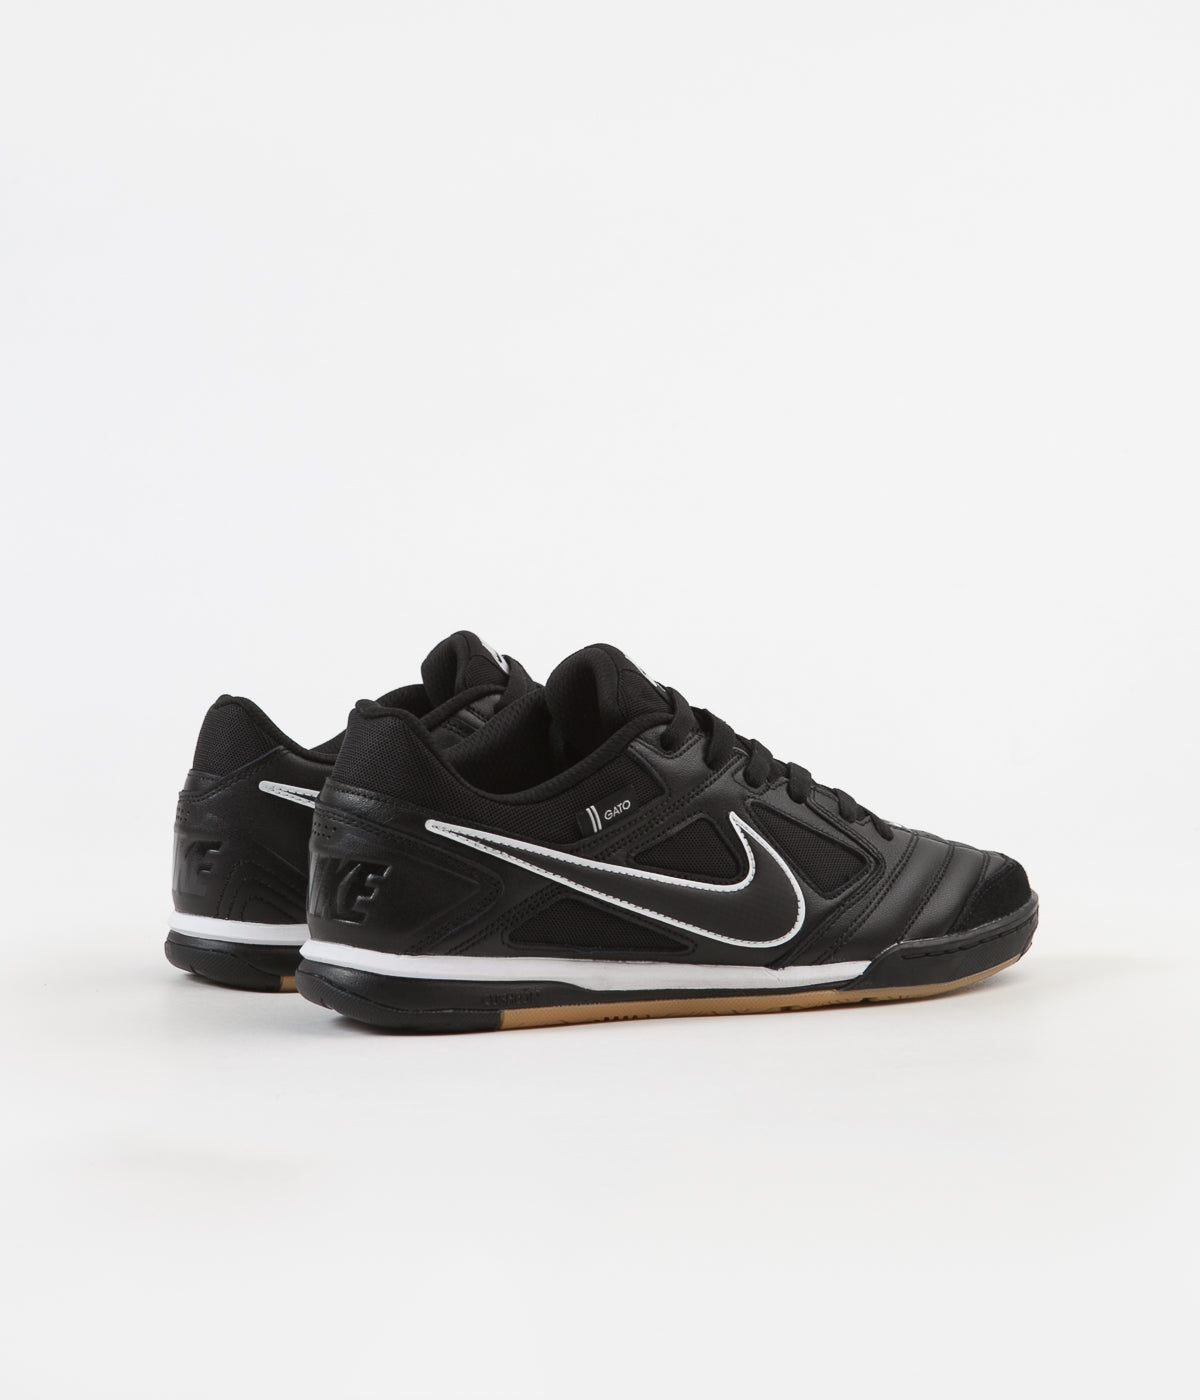 Nike SB Gato Shoes - Black / Black - White - Gum Light Brown | Flatspot